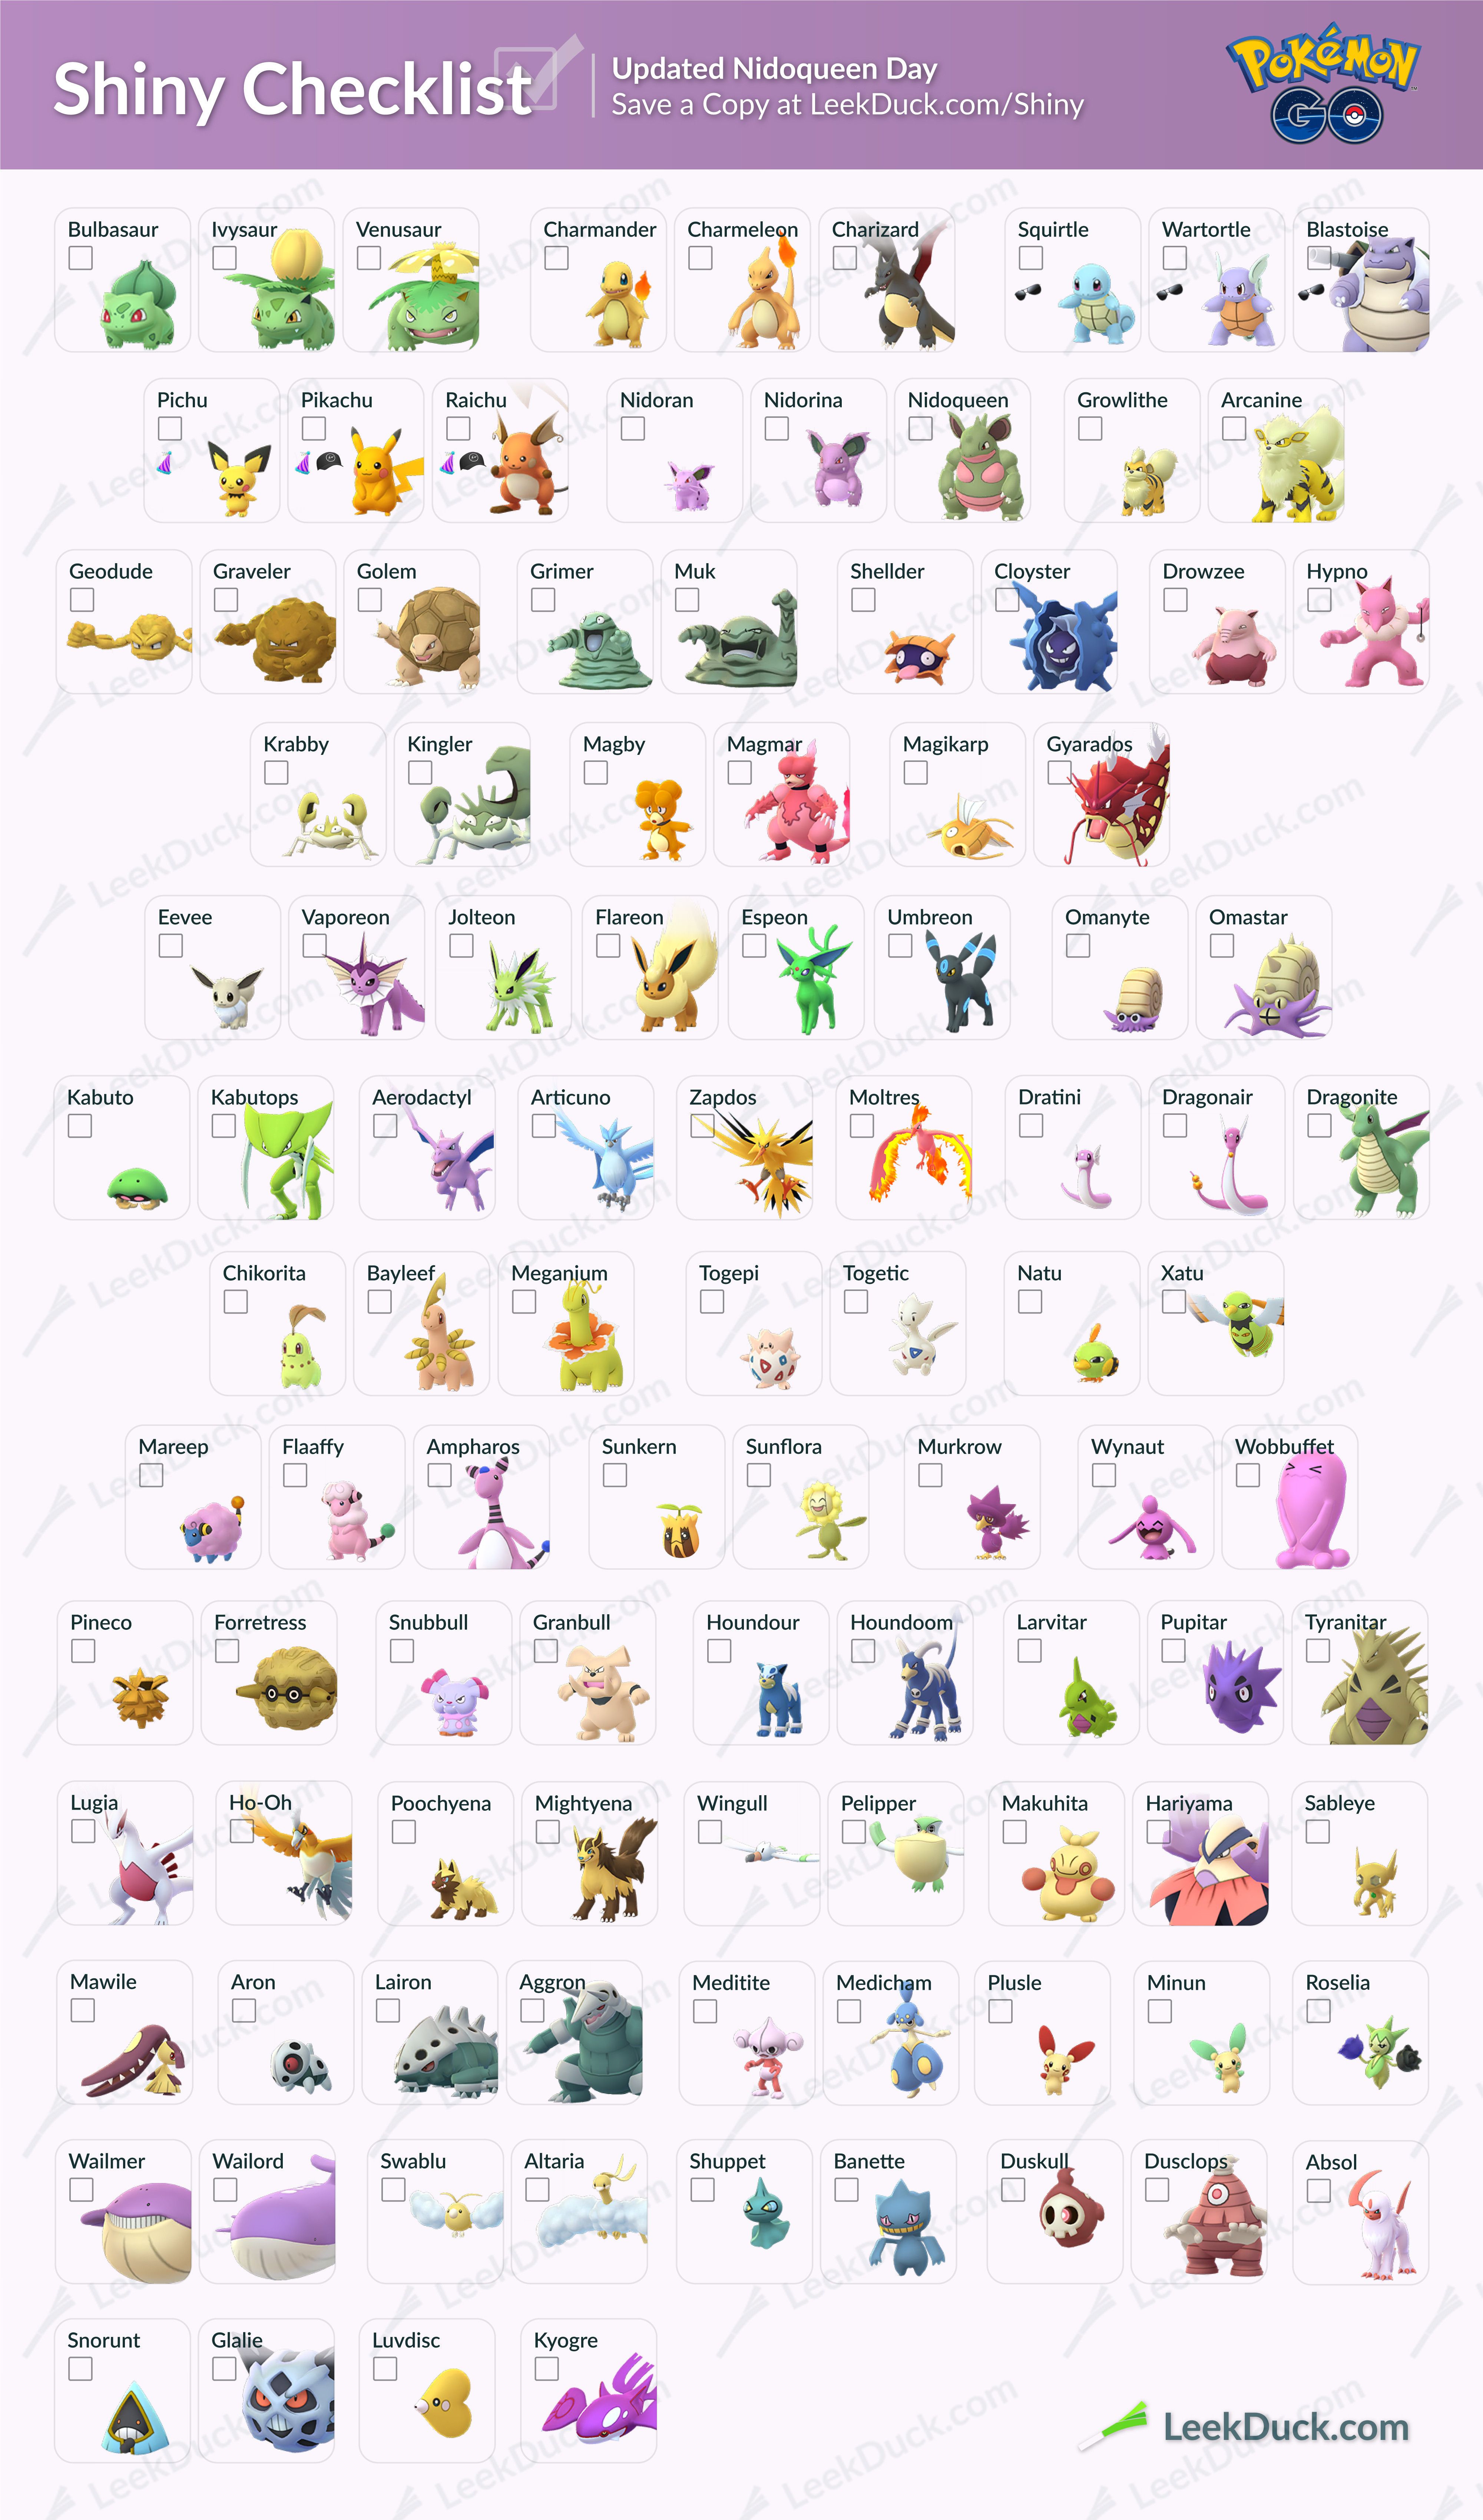 Complete List Of Shiny Pokemon In Pokemon Go Mmogames Com